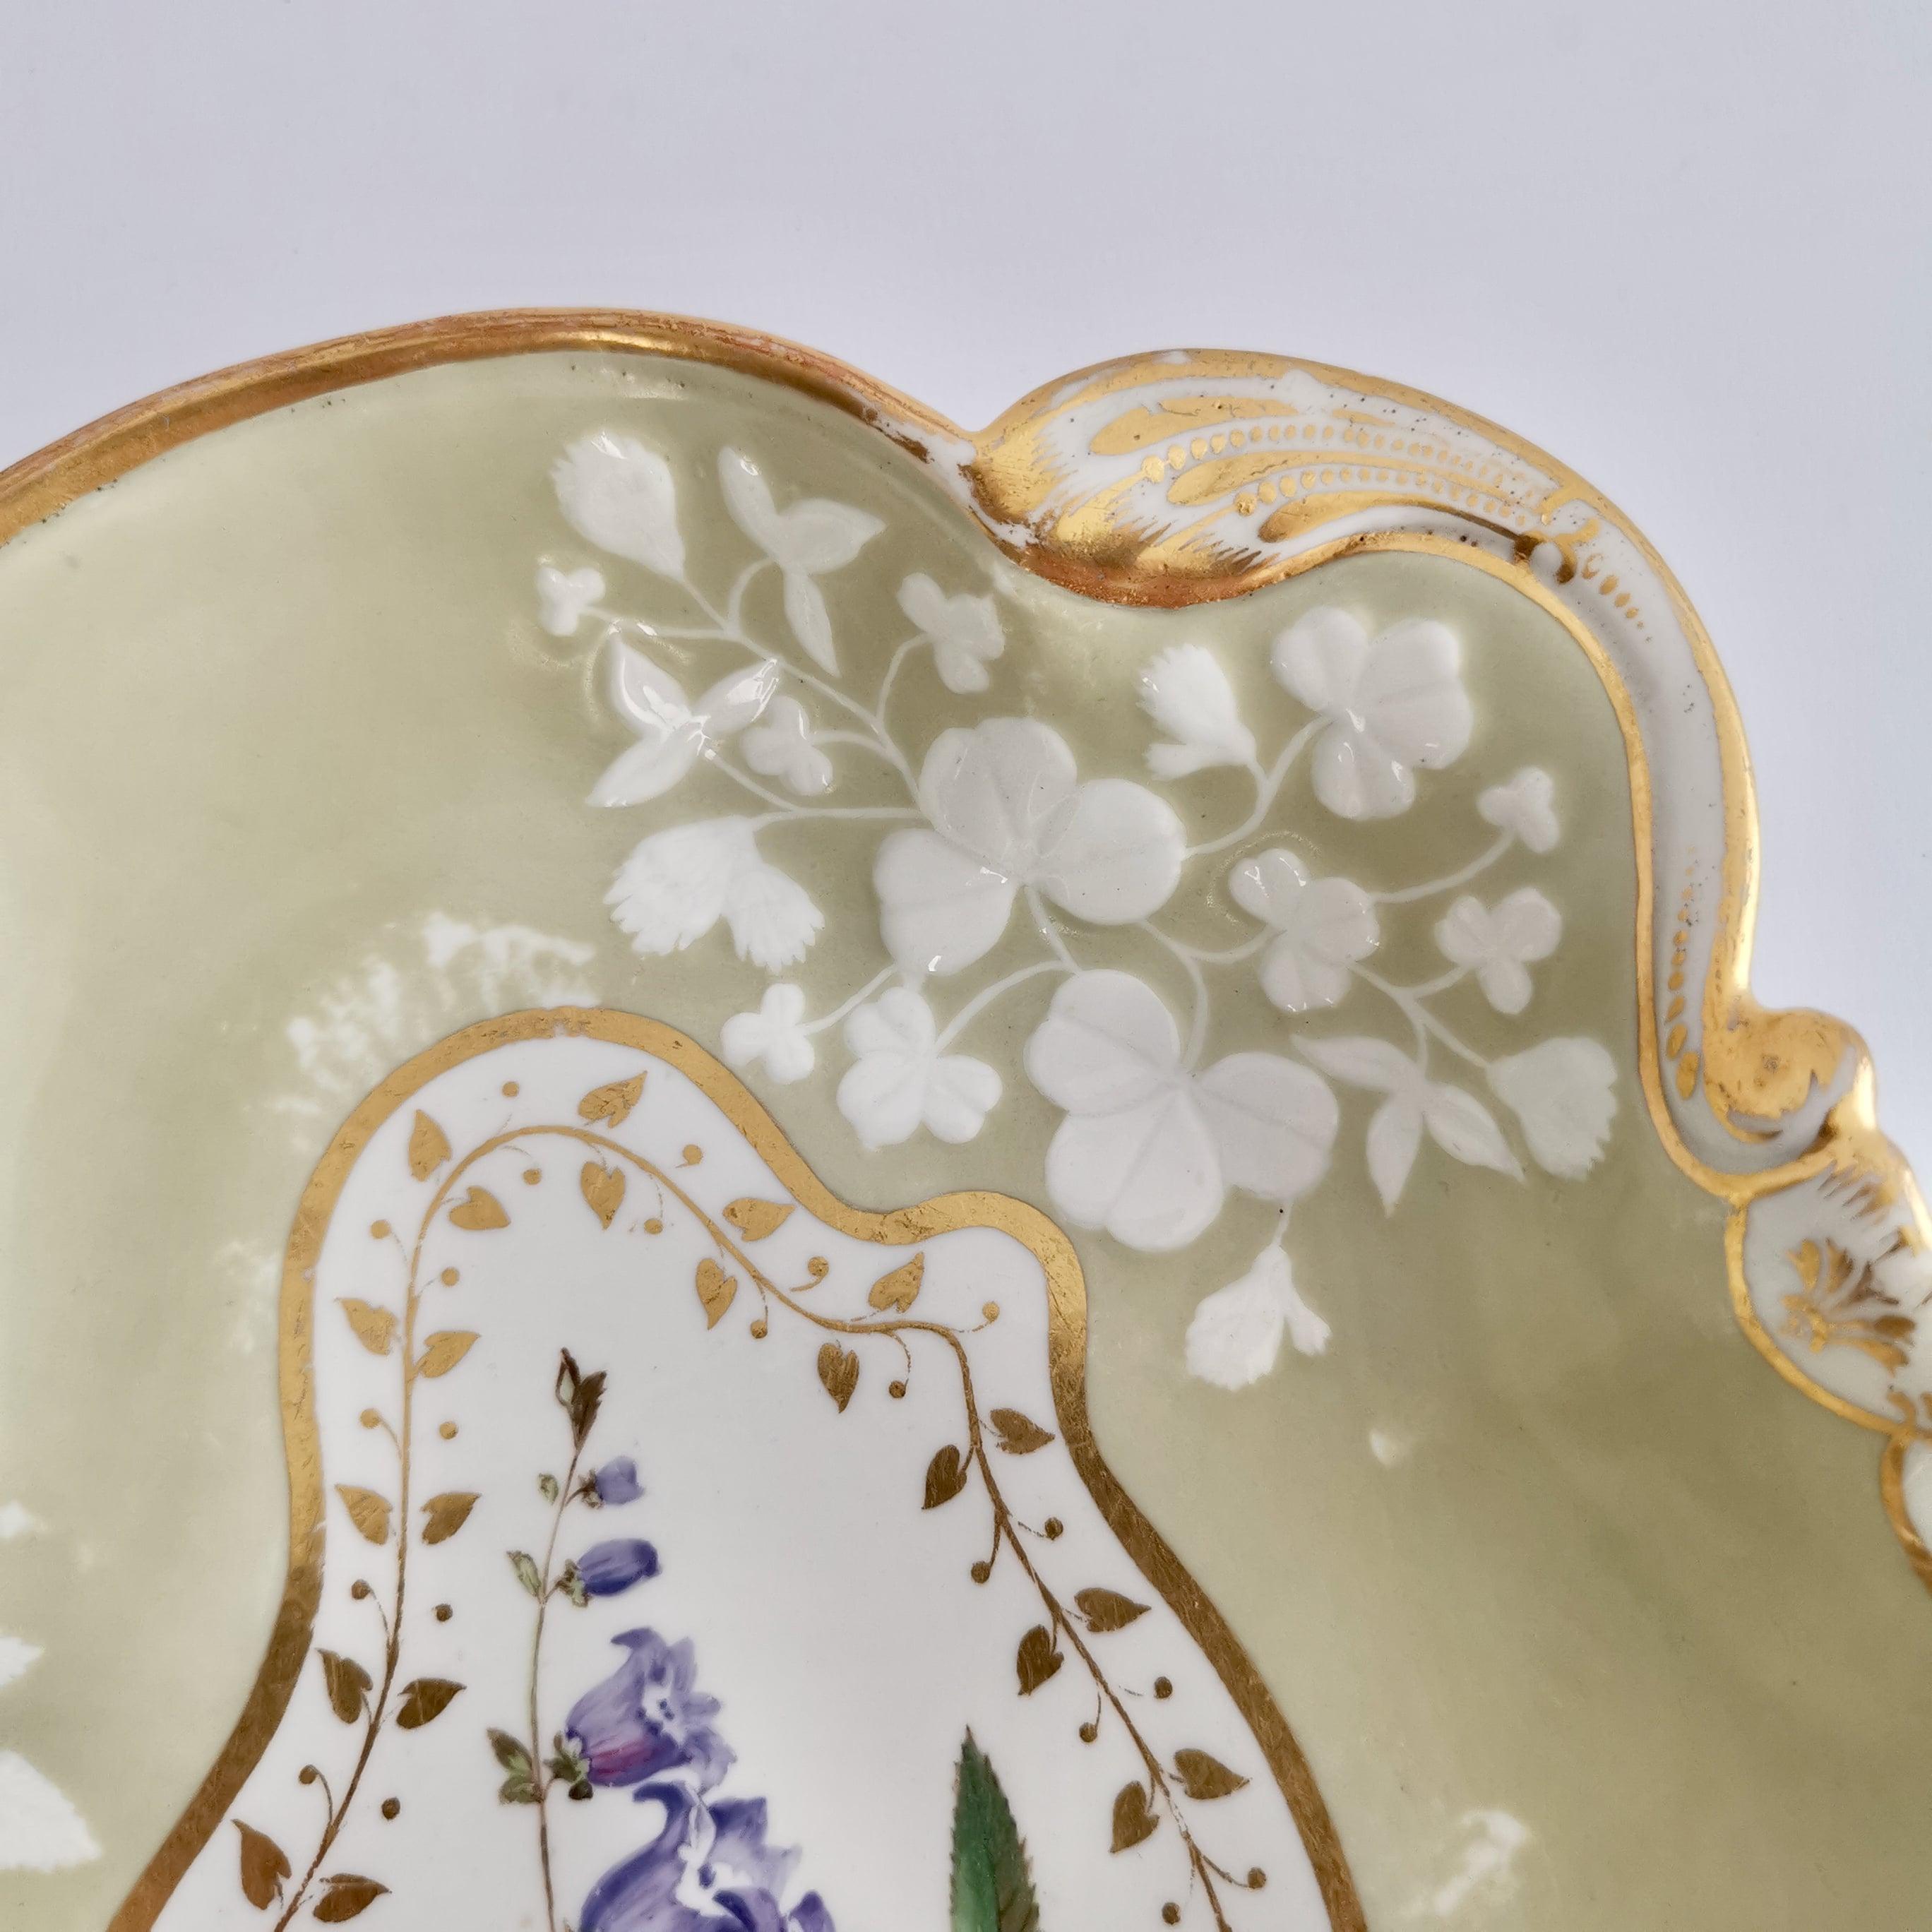 Chamberlains Worcester Porcelain Dessert Service, Sage Green, Flowers, 1816-1820 2